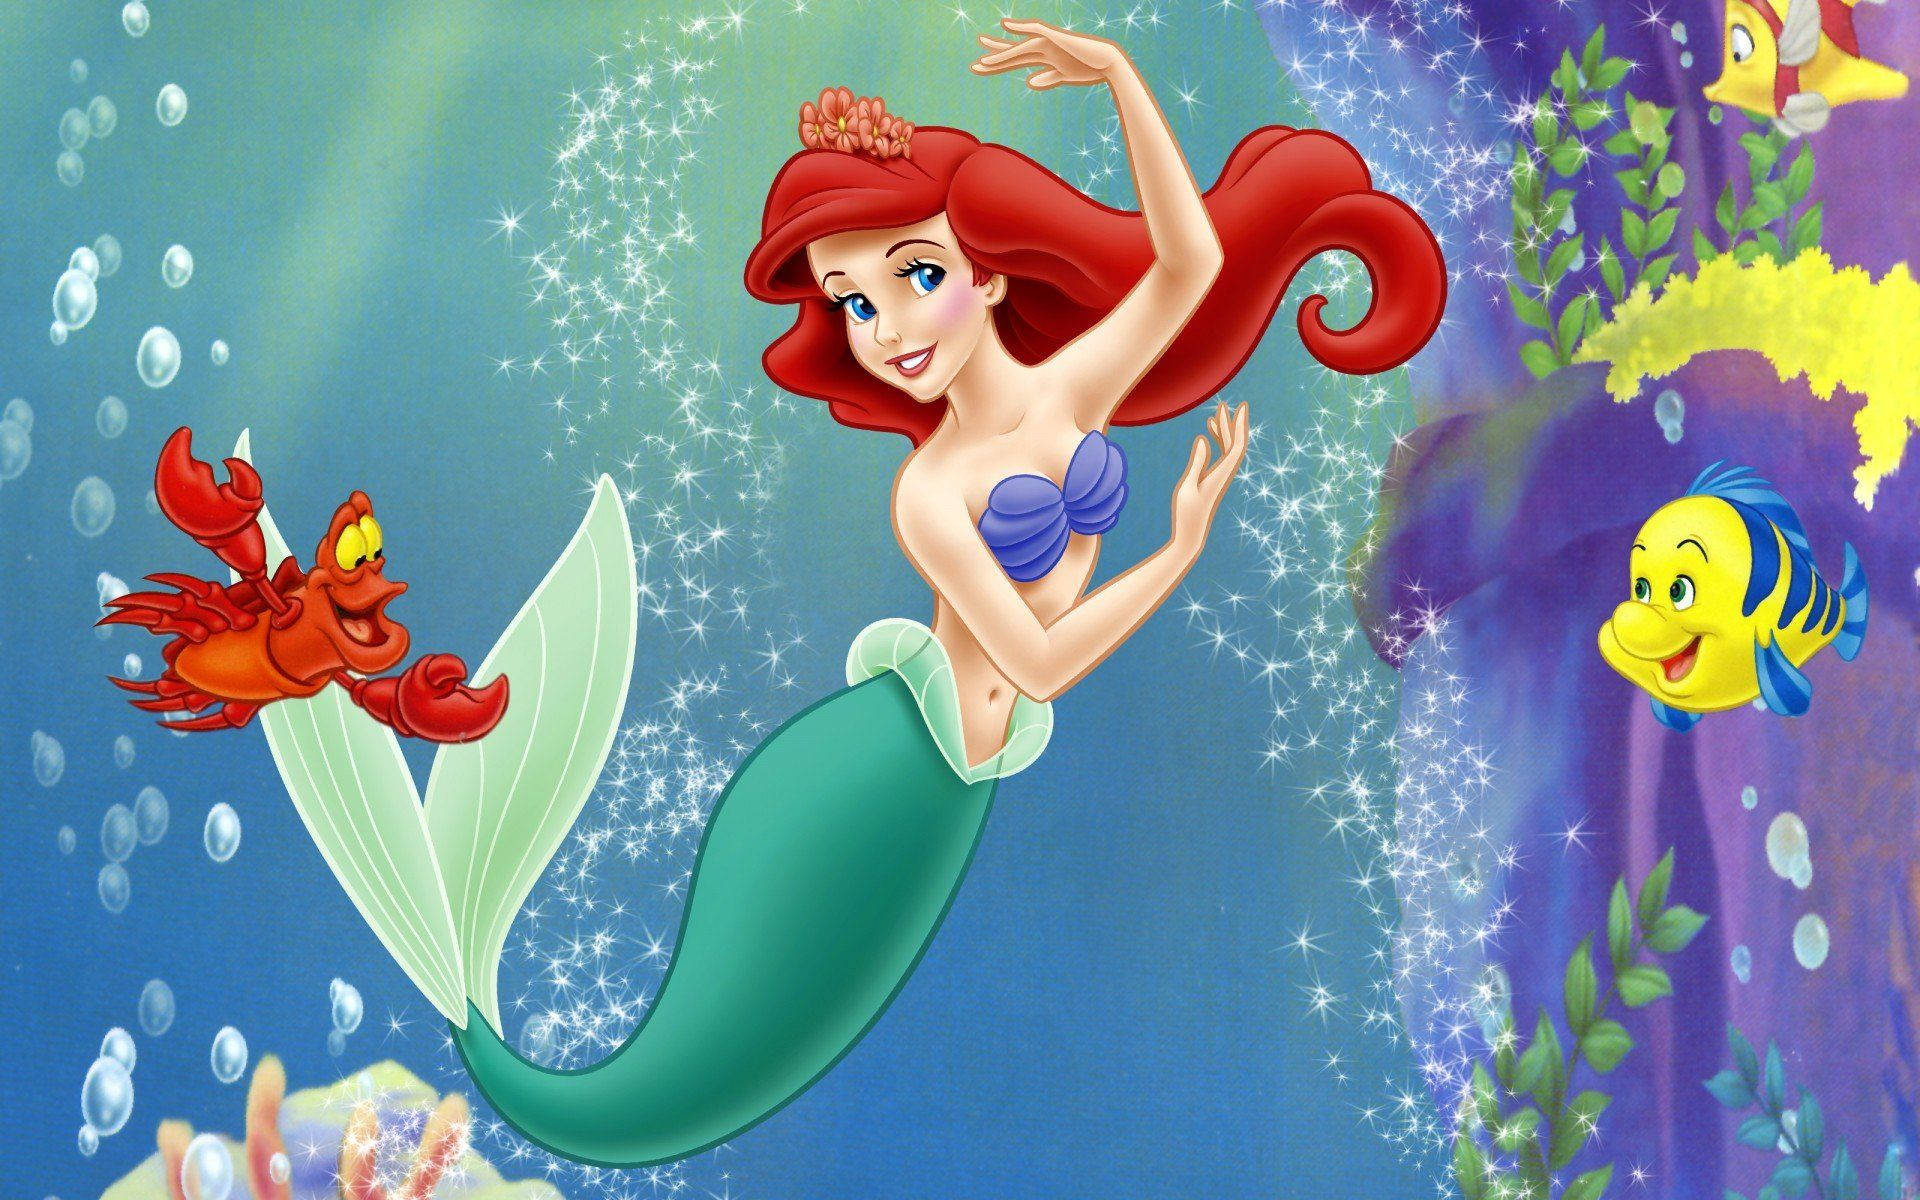 The Little Mermaid Ariel's Talent Background